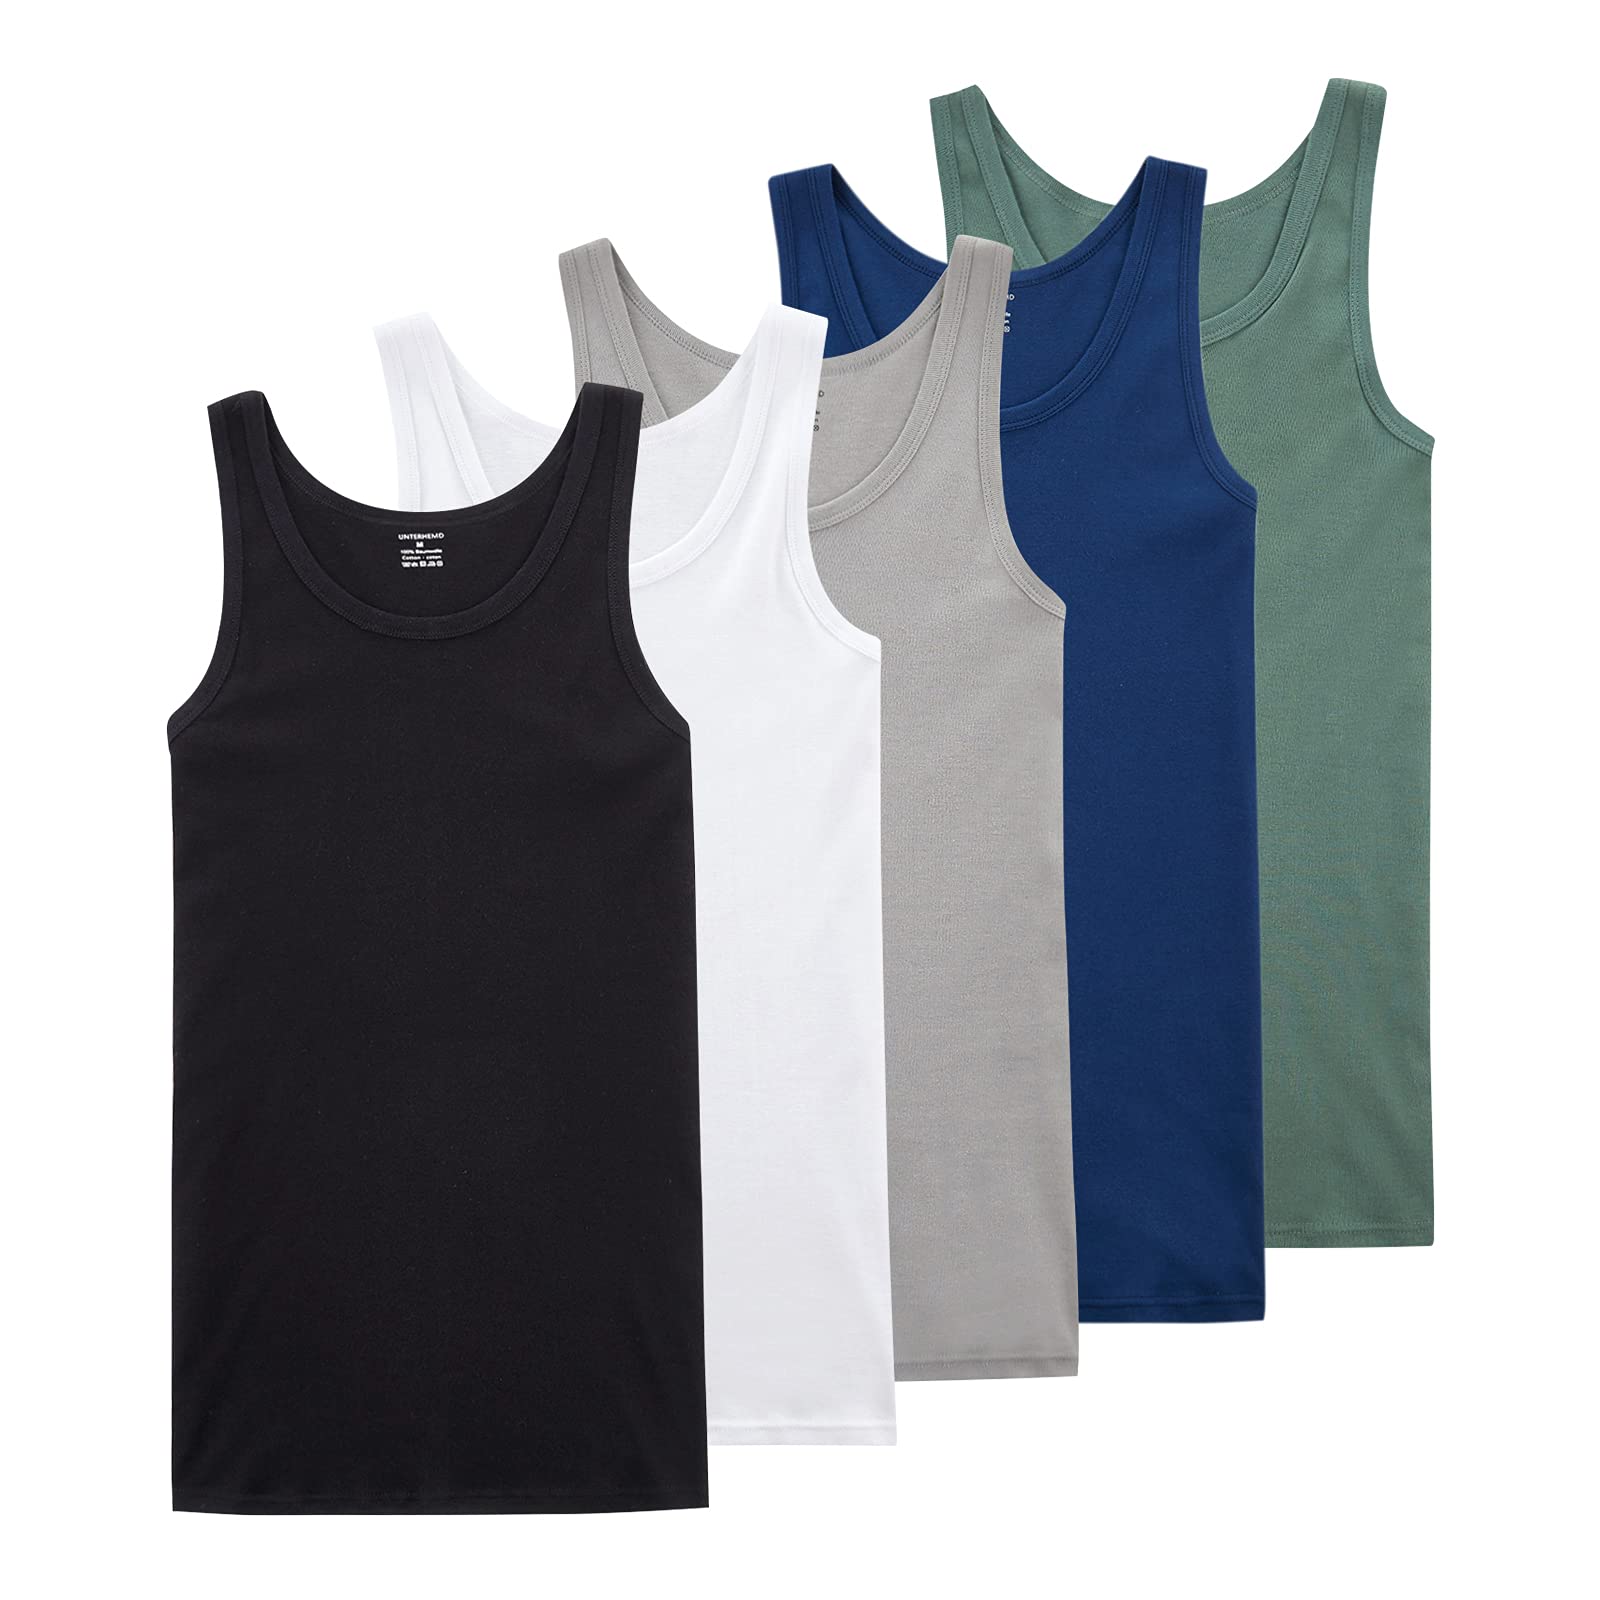 PAUNEW 100% Cotton Men's Vest 5 Pices Packs Confortable Muscle Tops Sleeveless Shirt